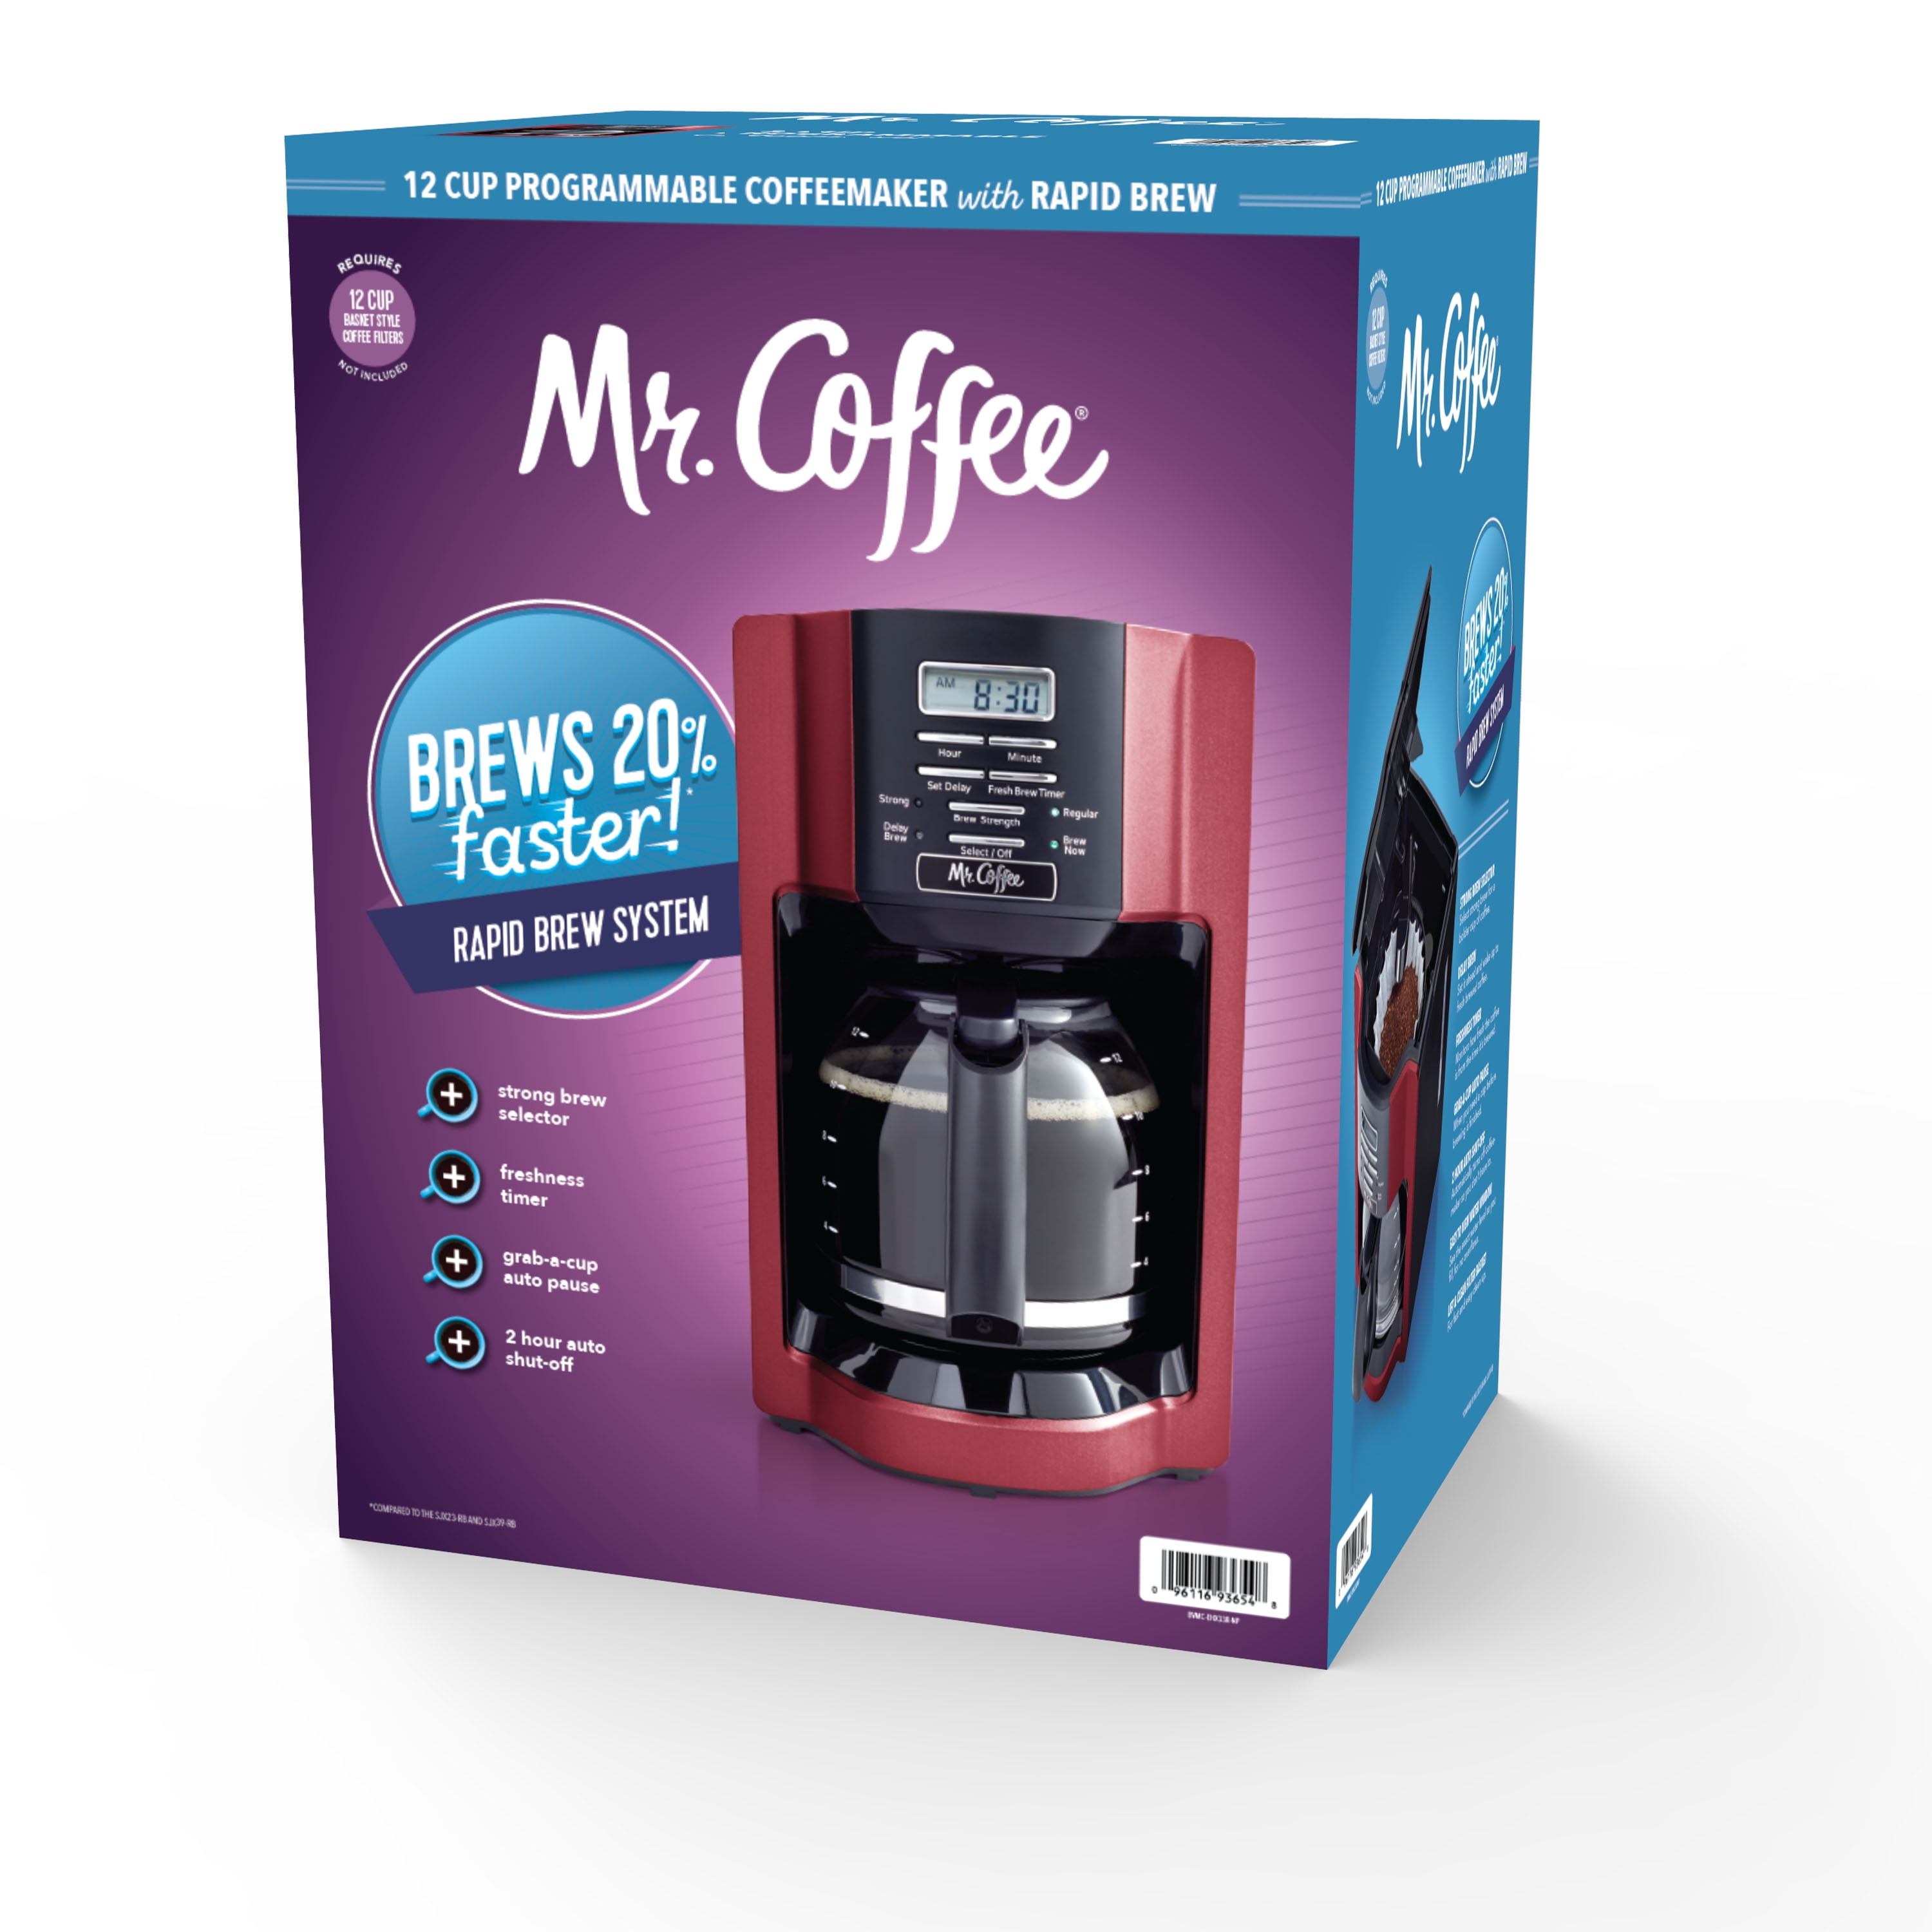 Mr. Coffee Daily Brew Coffee Press, Silver/Clear, 1.2 QT